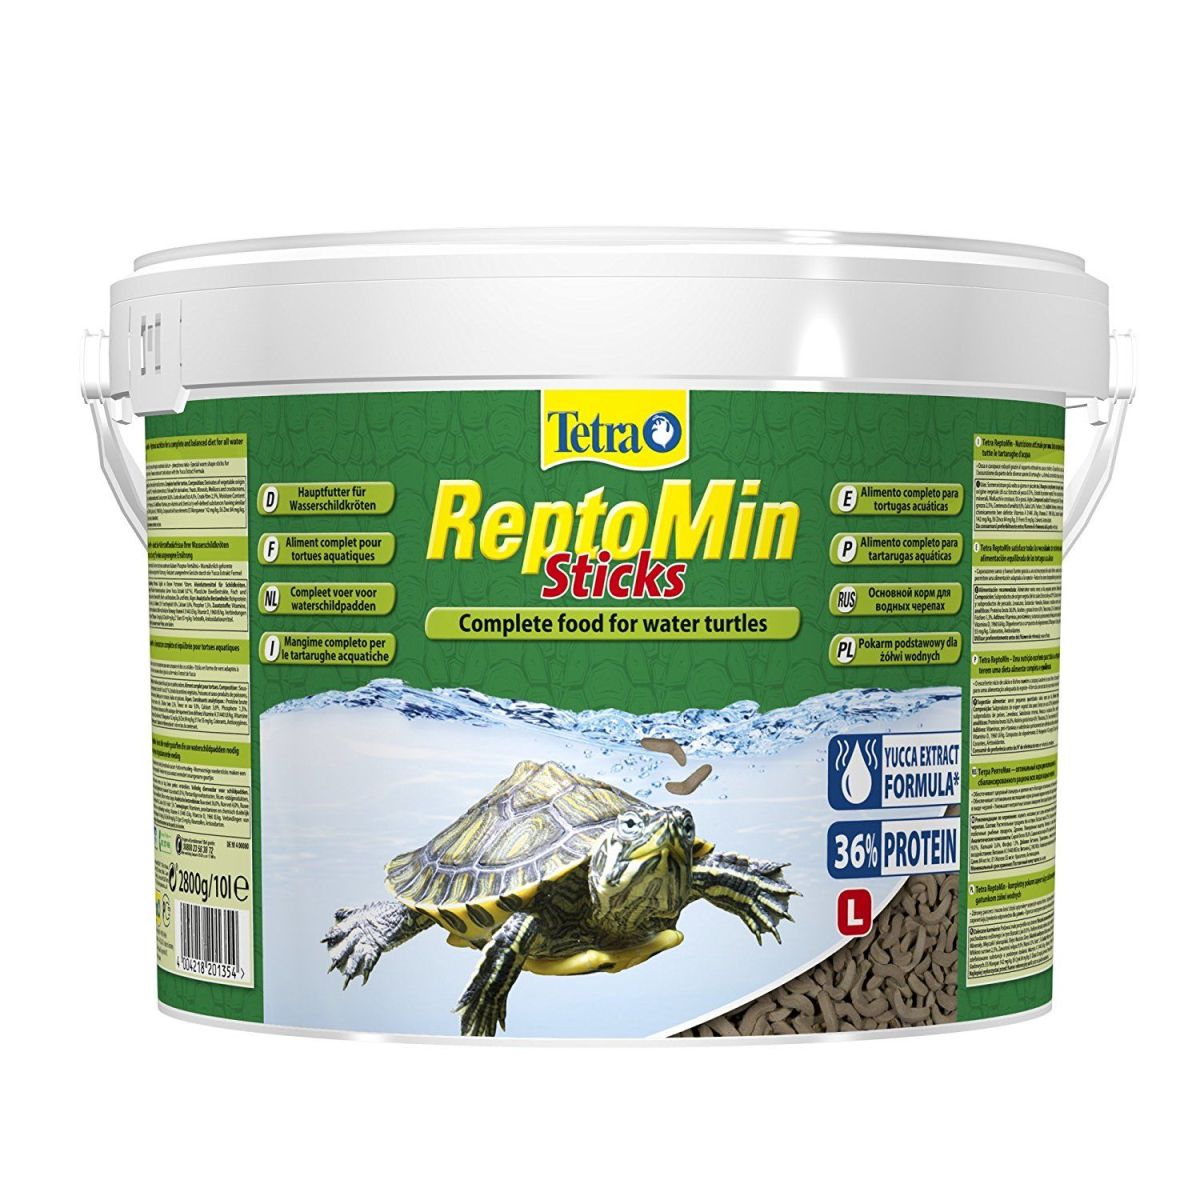 Tetra ReptoMin Sticks Аквариумистика (Корм для водных черепах)